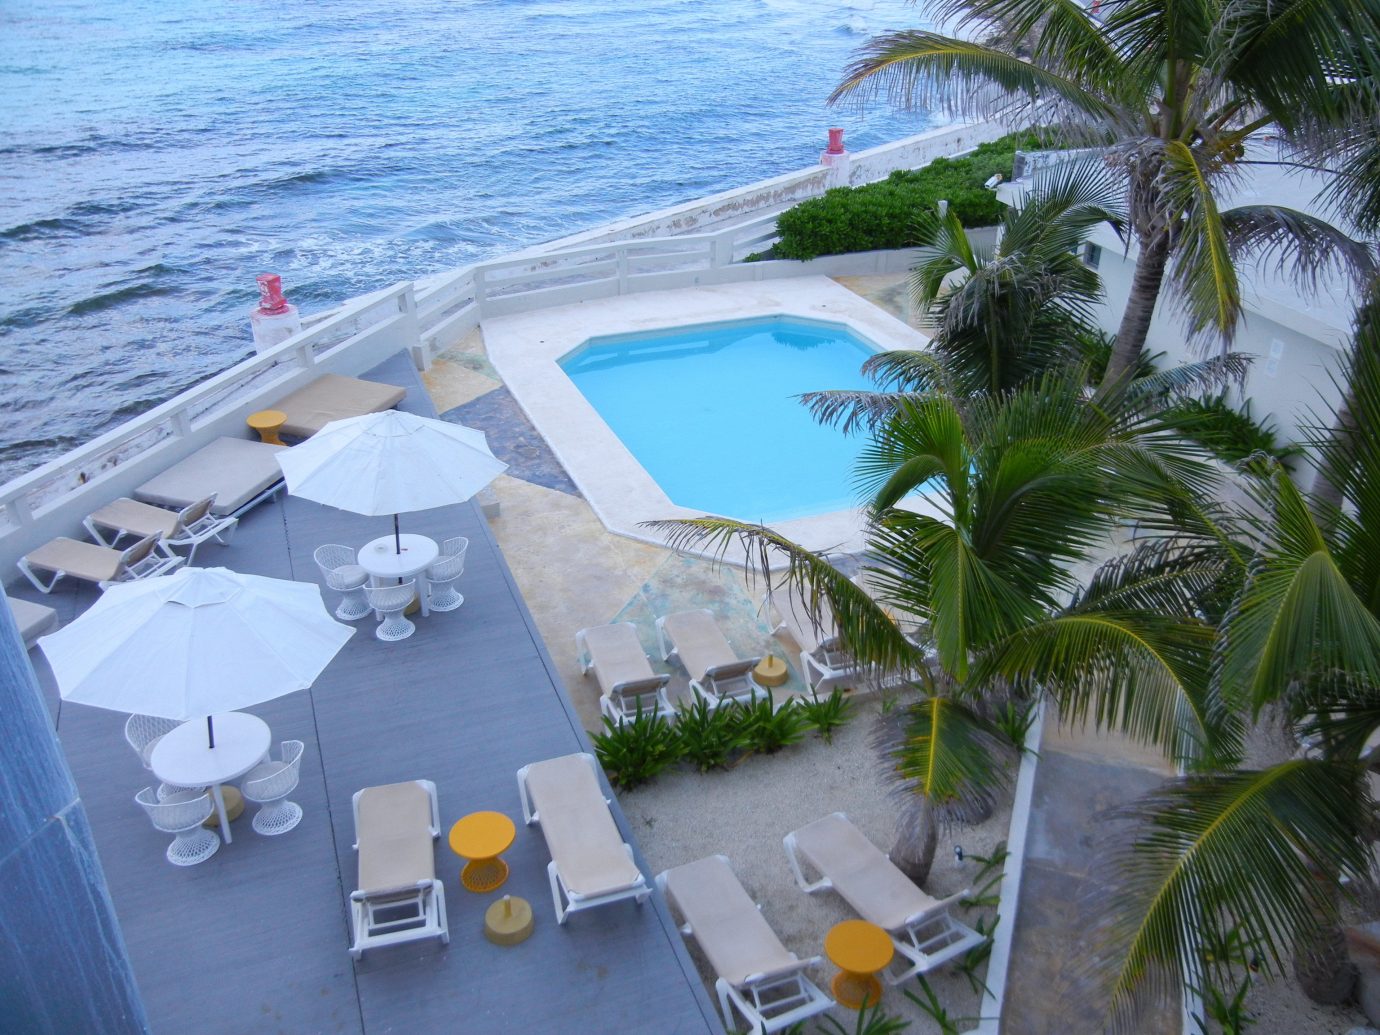 Budget outdoor caribbean Resort vacation marina vehicle swimming pool dock Sea tree plant shore